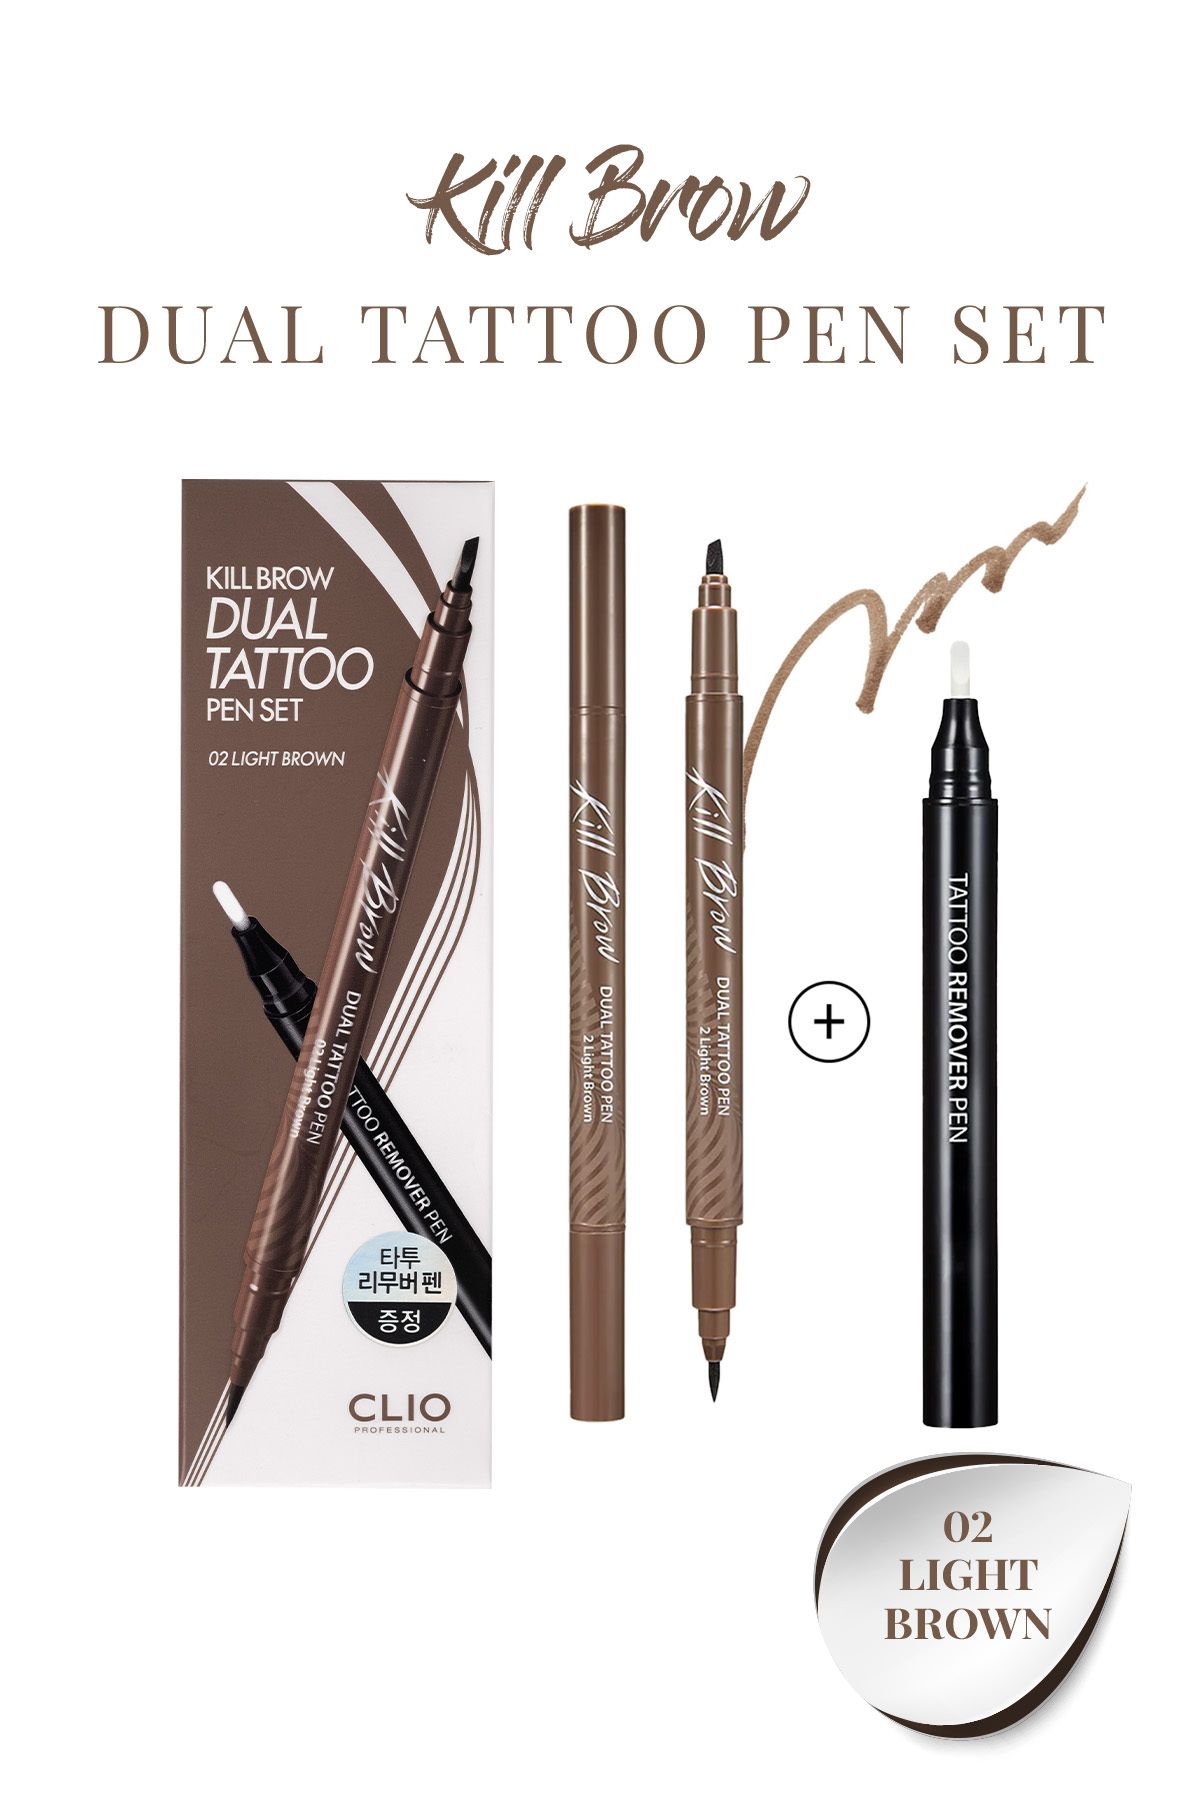 CLIO Yarı Kalıcı Kaş ve Makyaj Düzeltici Kalem Seti Clio Kill Brow Dual Tattoo Pen Set (02 Light Brown) 6746